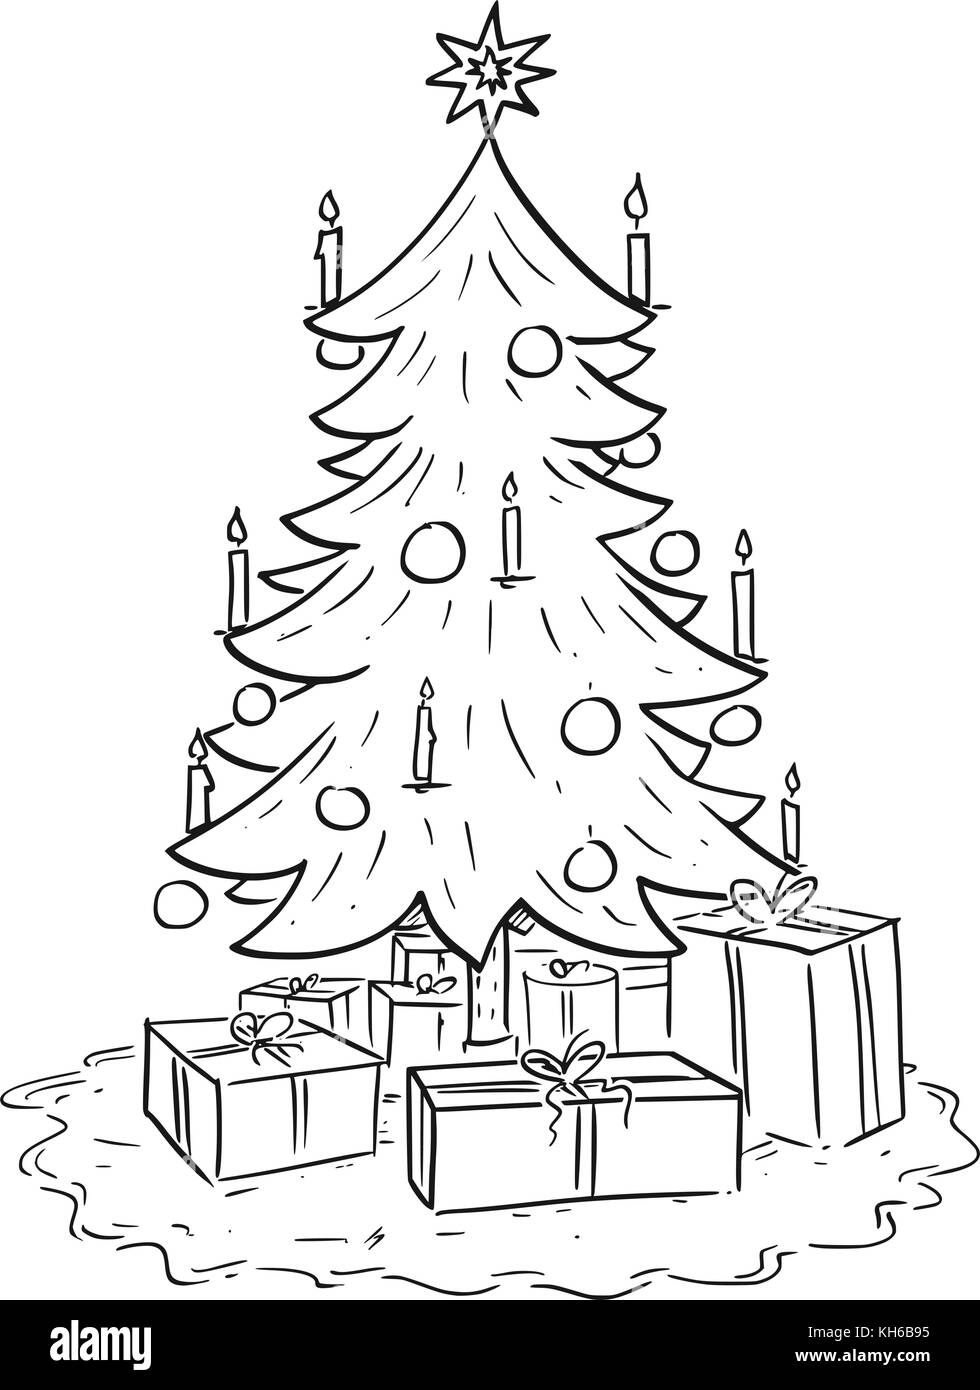 Cartoon Drawing Illustration Of Christmas Spruce Or Fir Tree